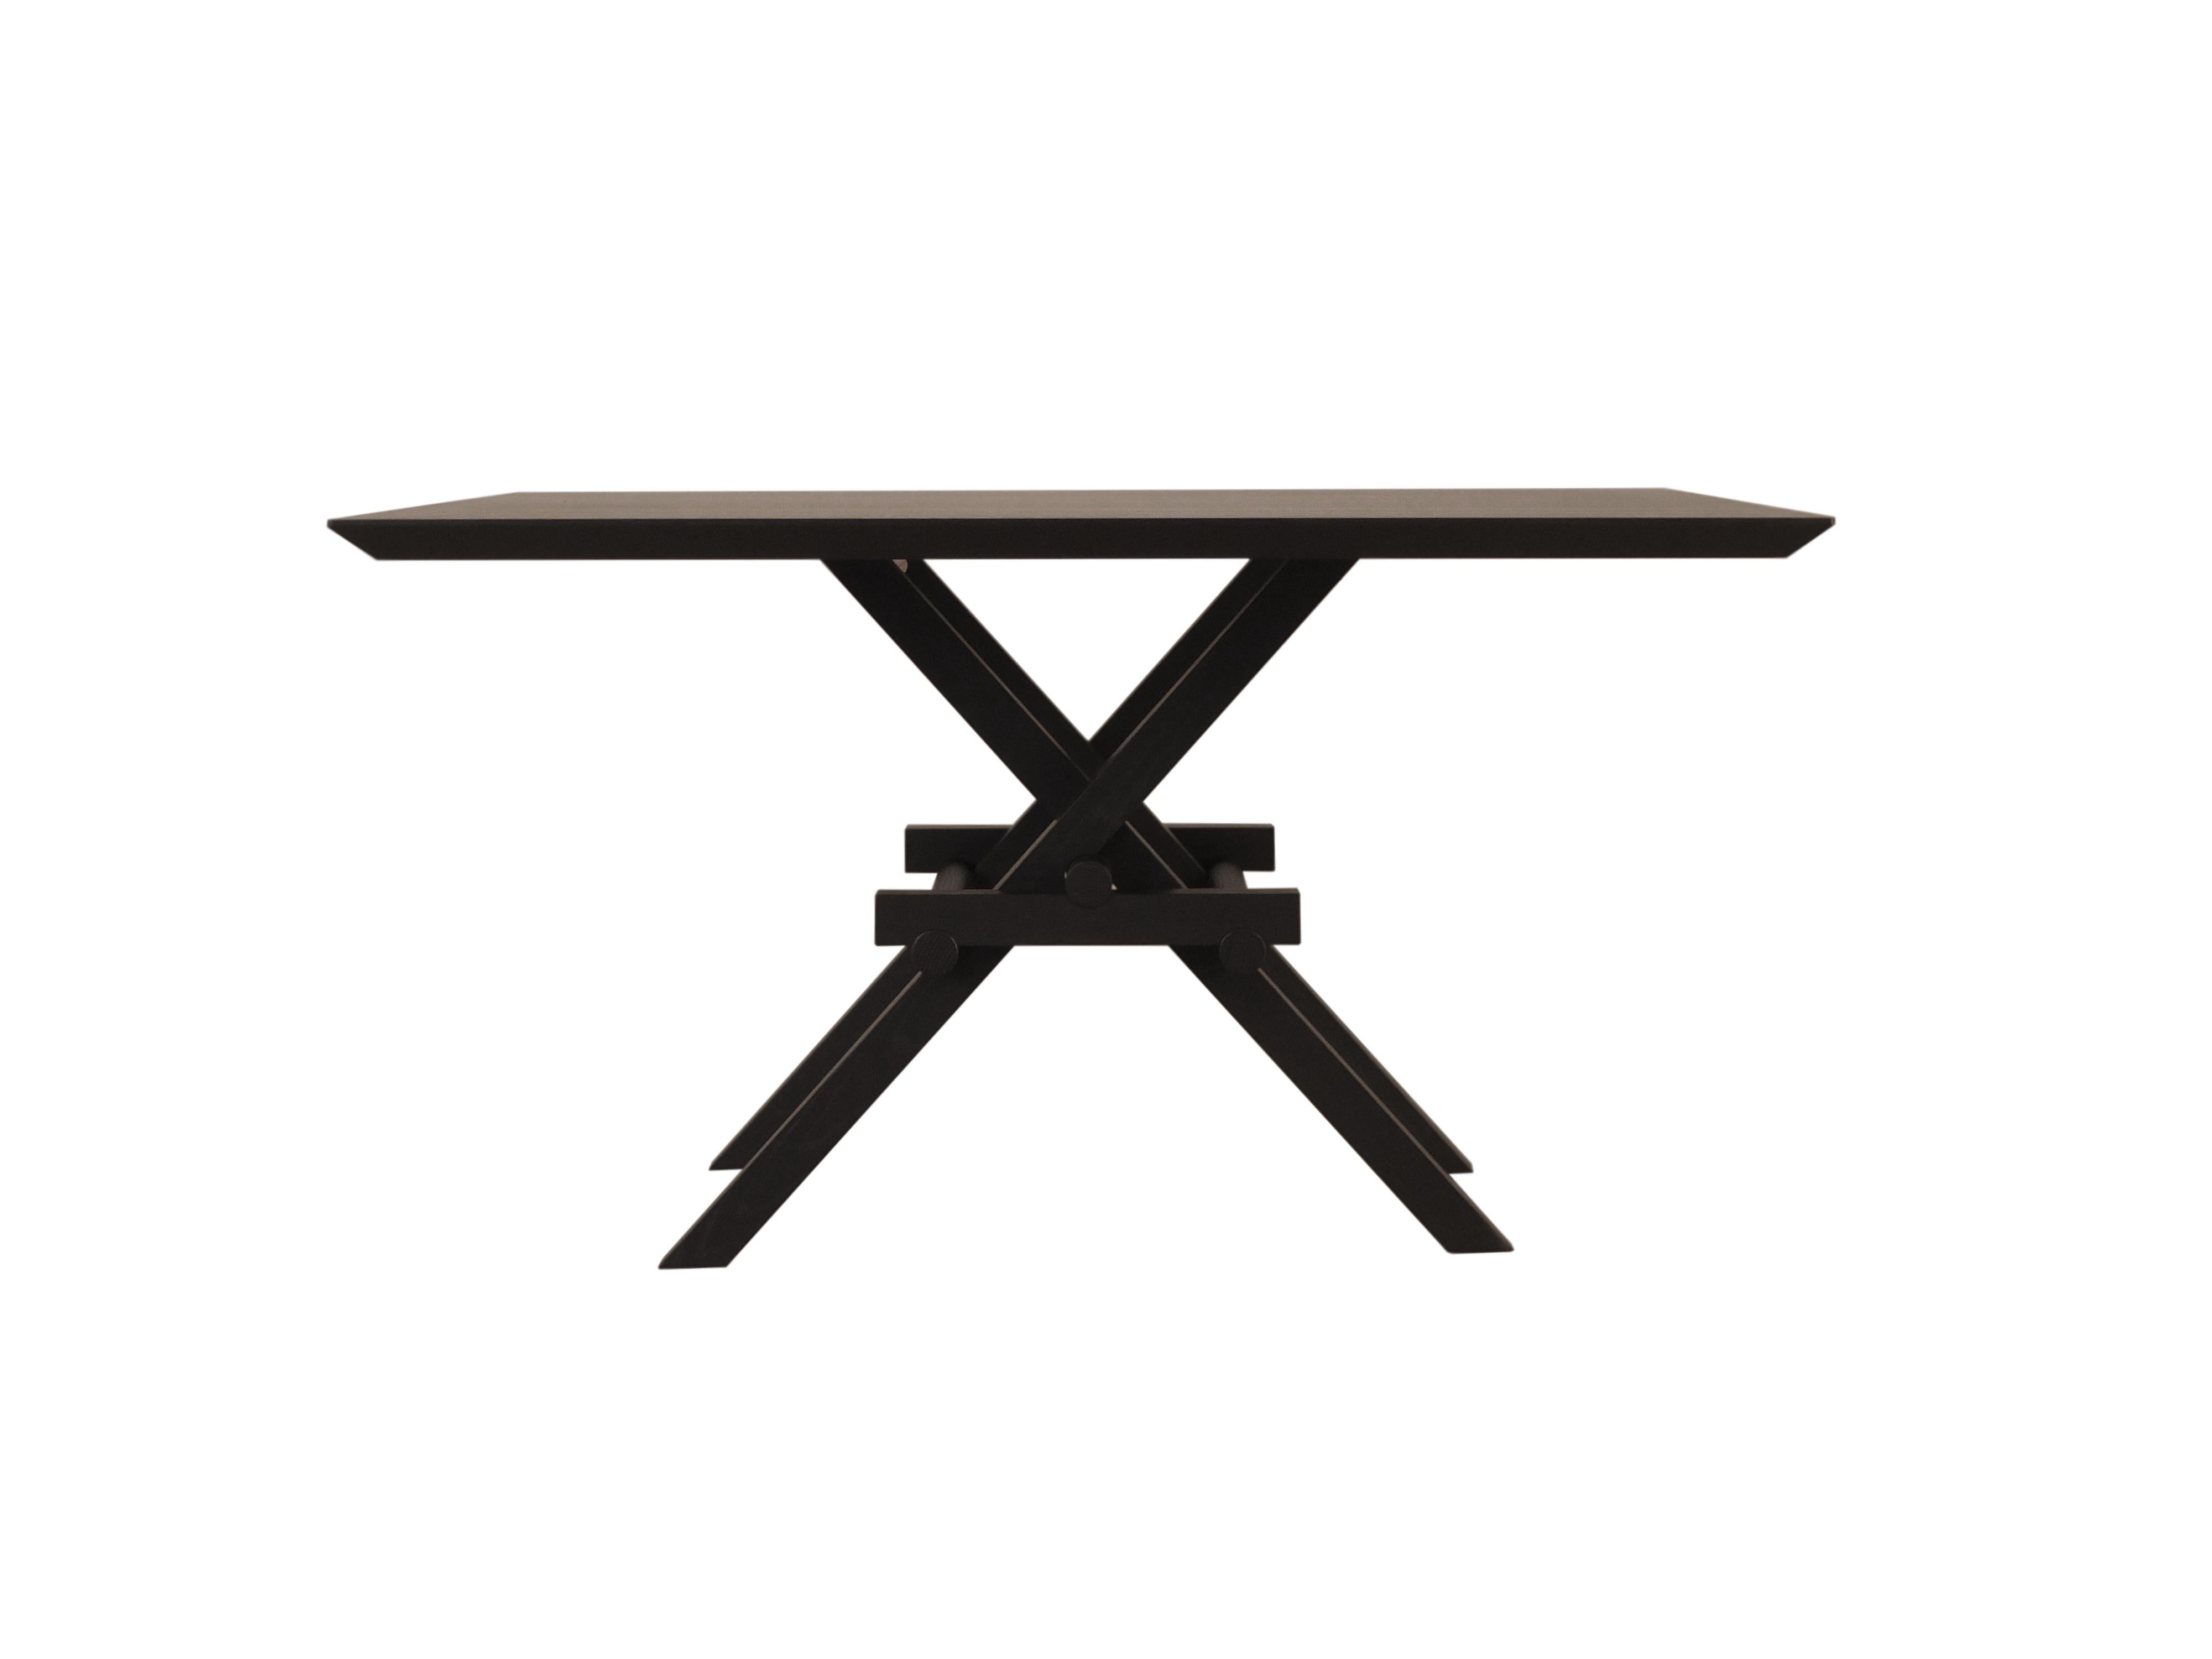 Italian Leonardo Contemporary Table Made of Ashwood with Interlocking Legs